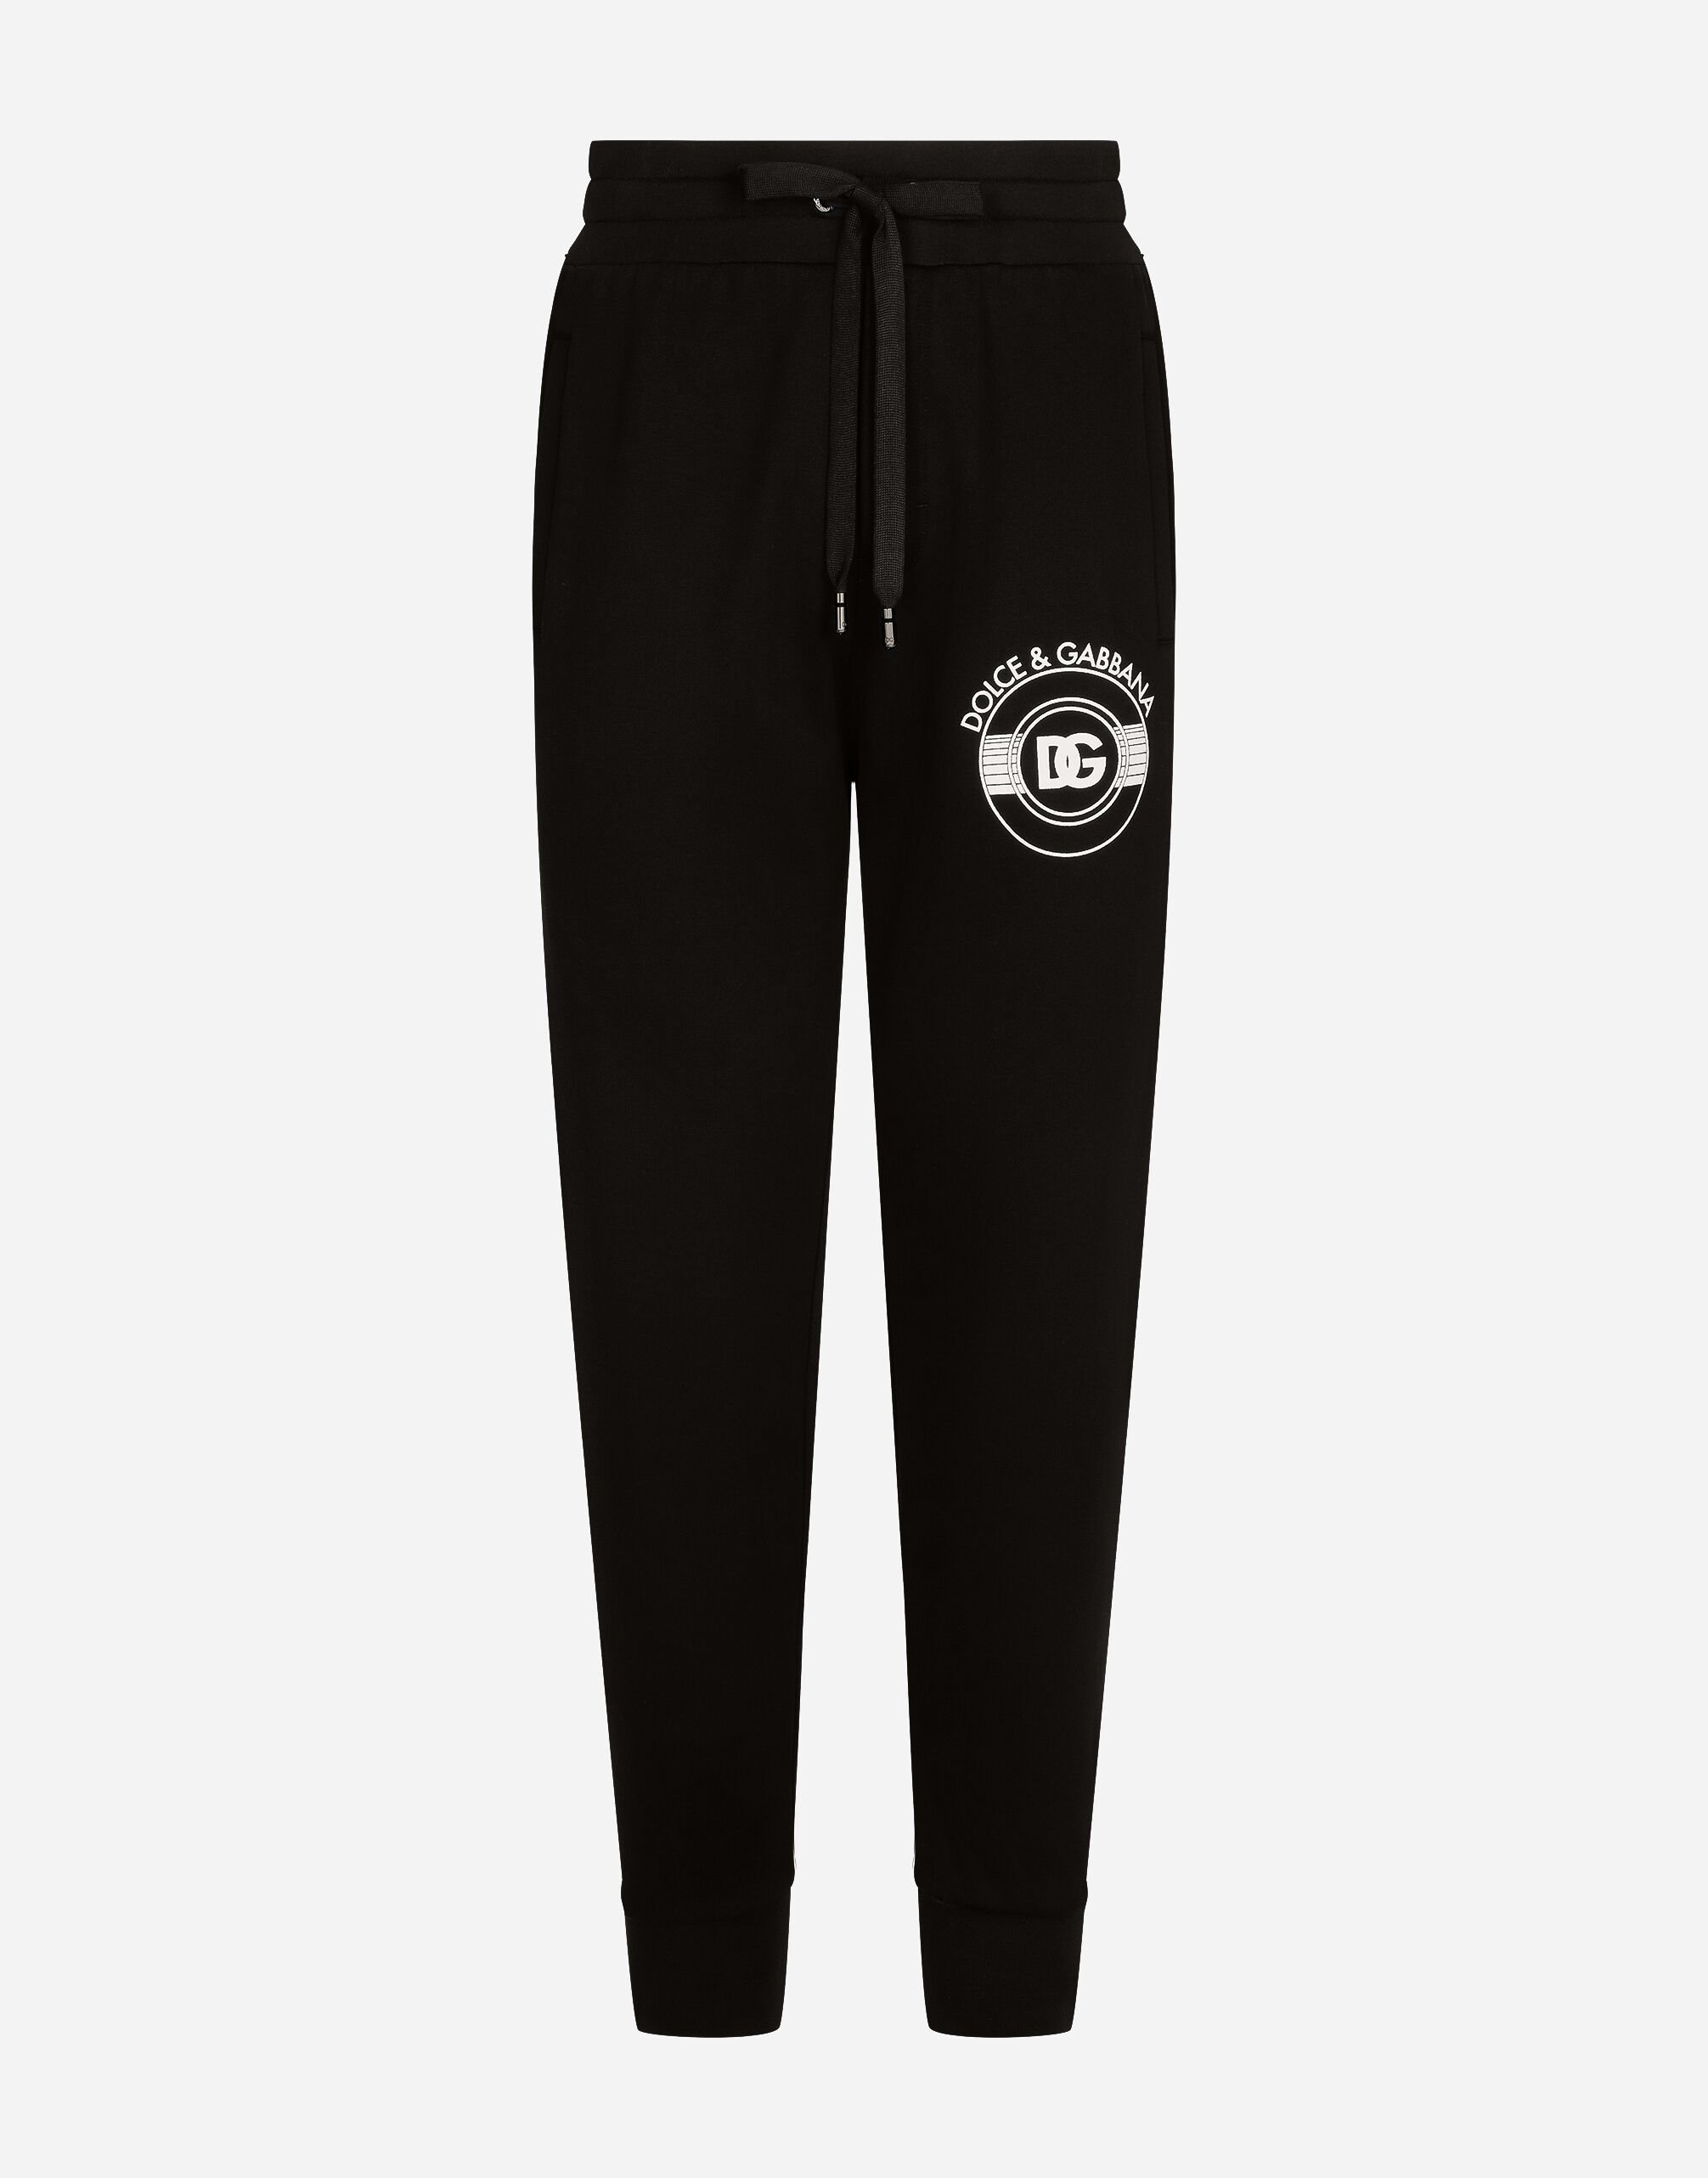 Dolce & Gabbana Jersey jogging pants with DG logo print Black VG446FVP187